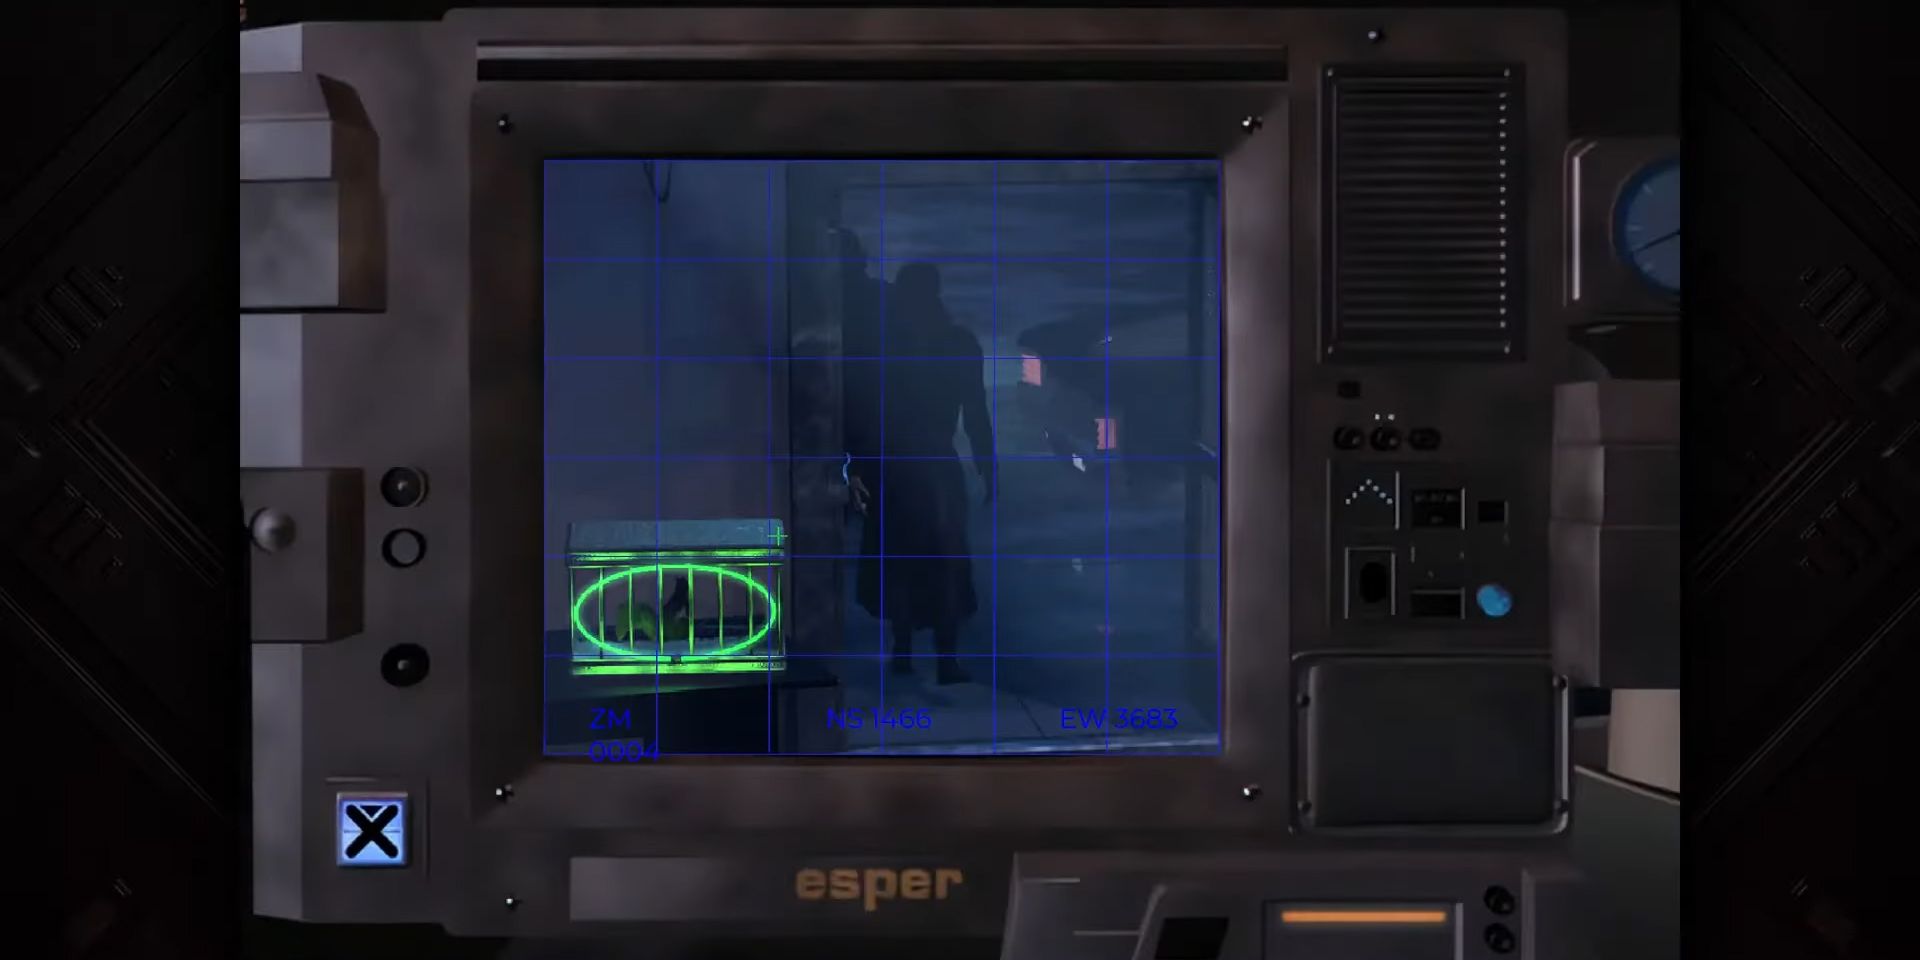 A screenshot showing the esper system in Blade Runner: Enhanced Edition